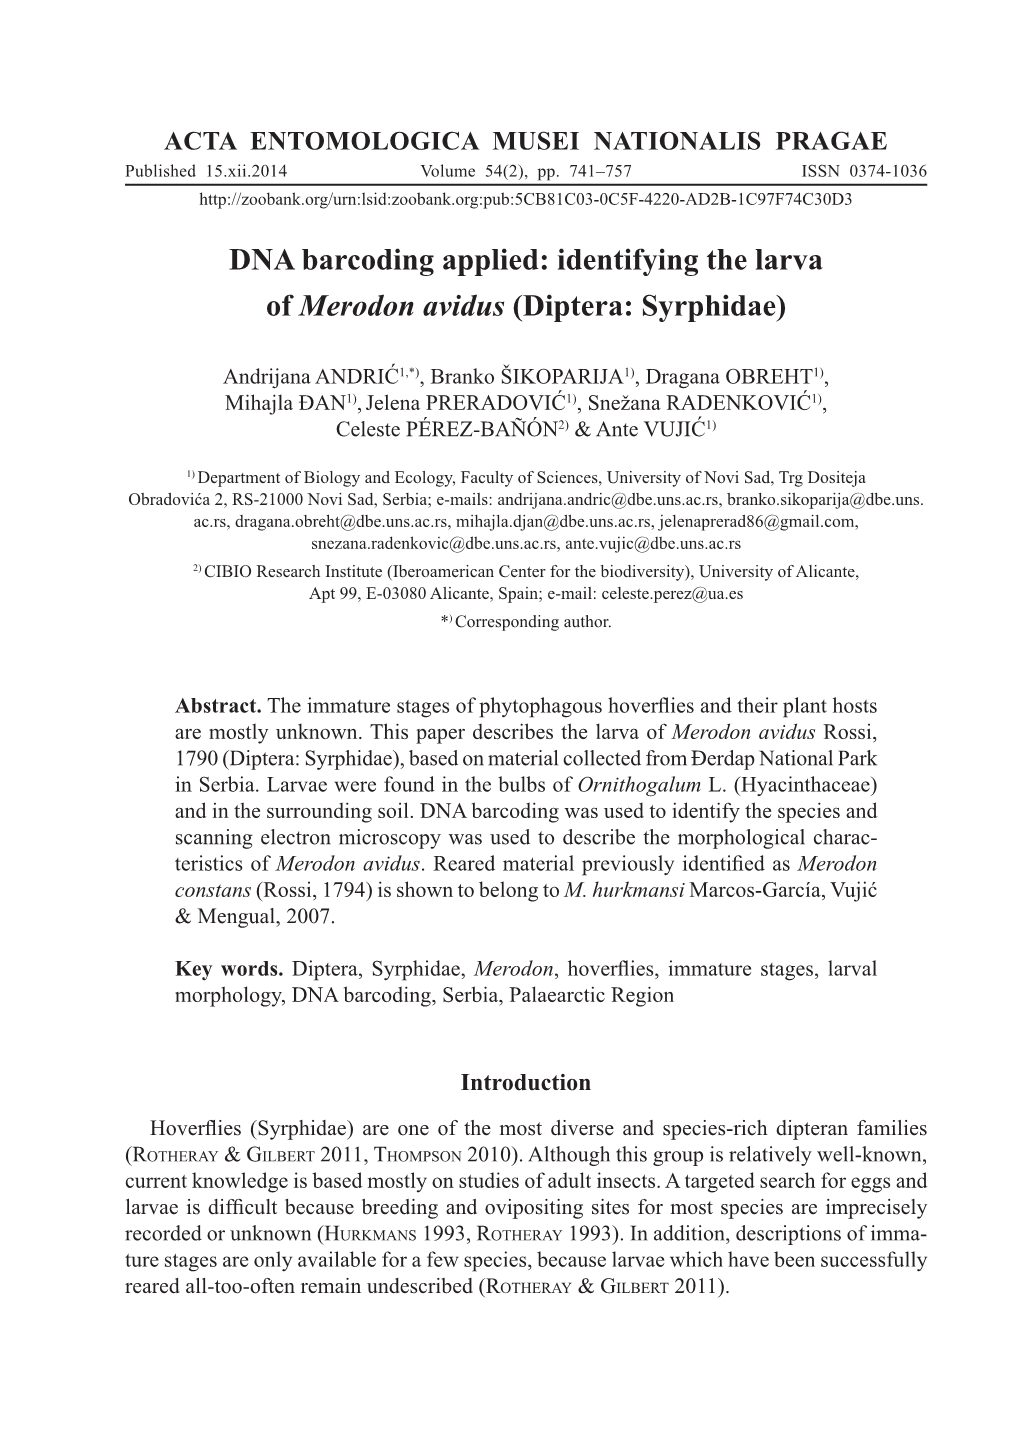 DNA Barcoding Applied: Identifying the Larva of Merodon Avidus (Diptera: Syrphidae)